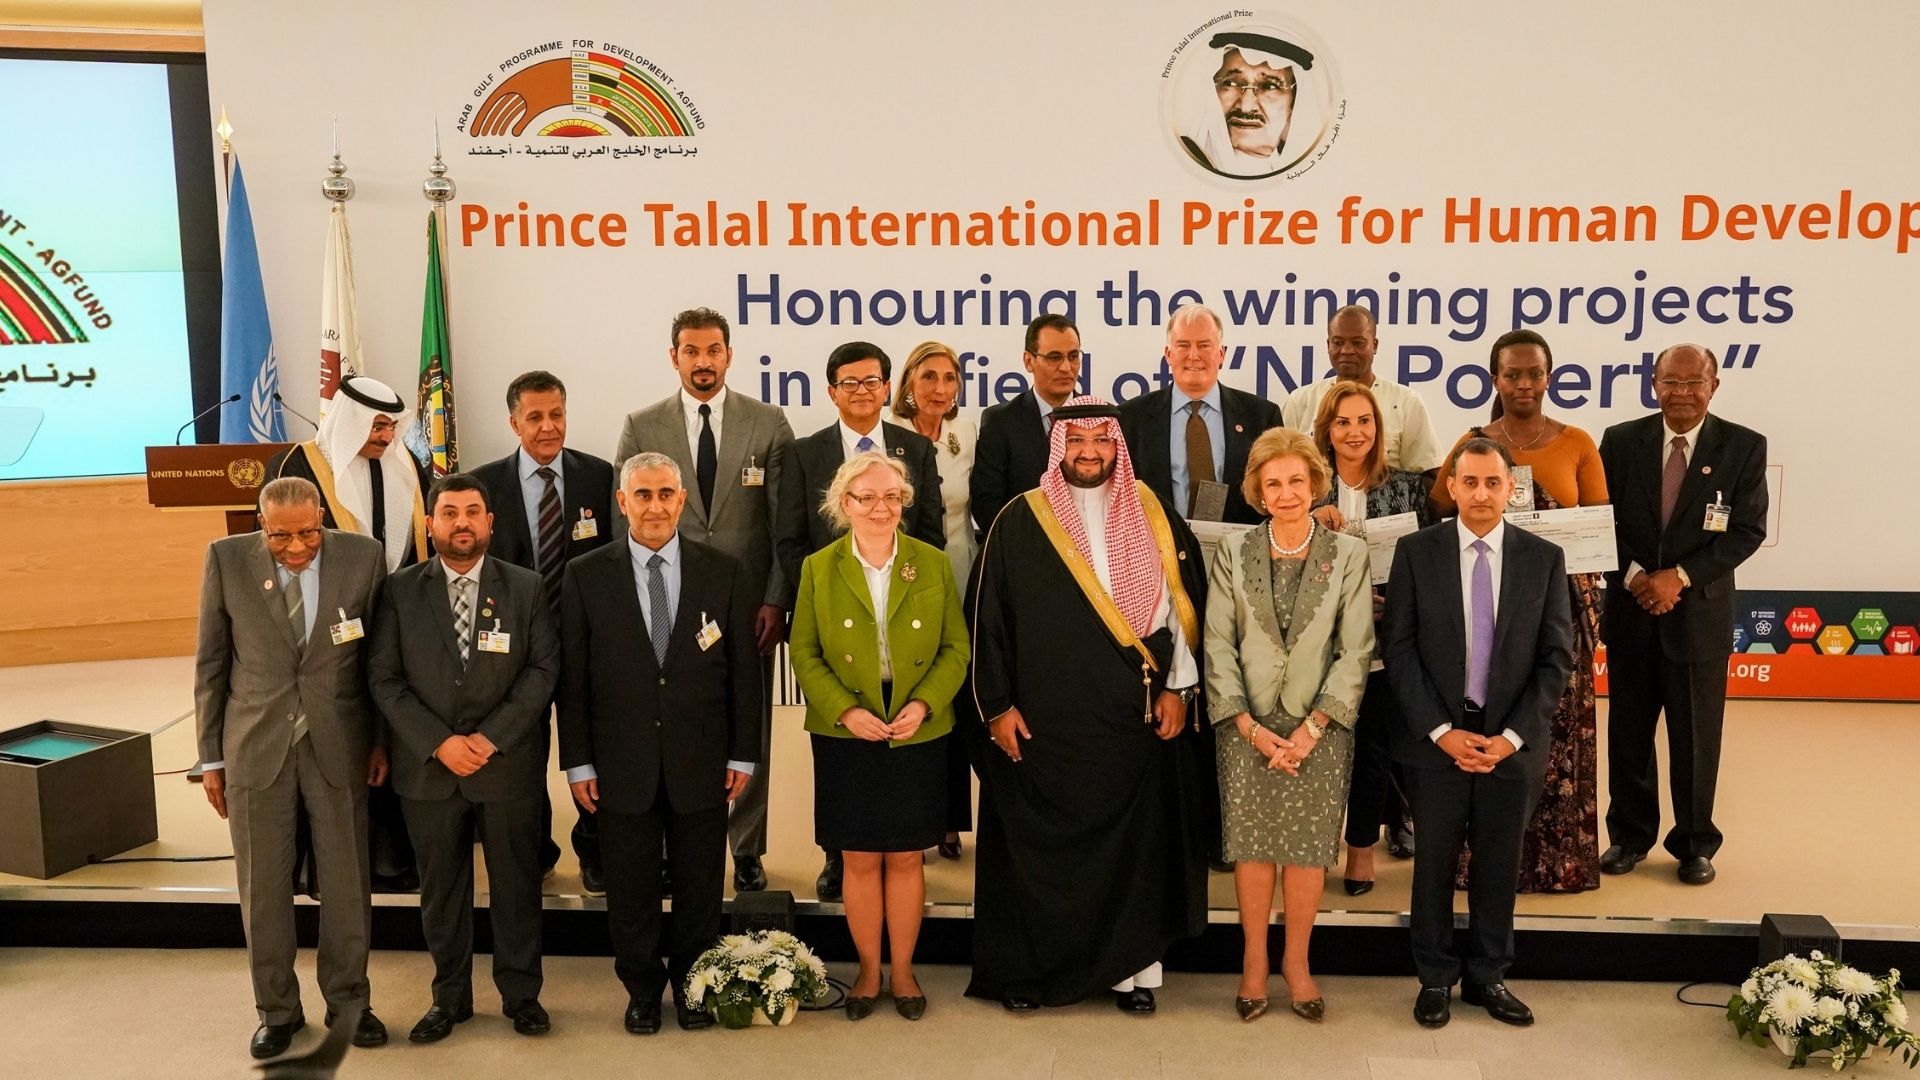 Prince Talal International Prize for Human Development 2018